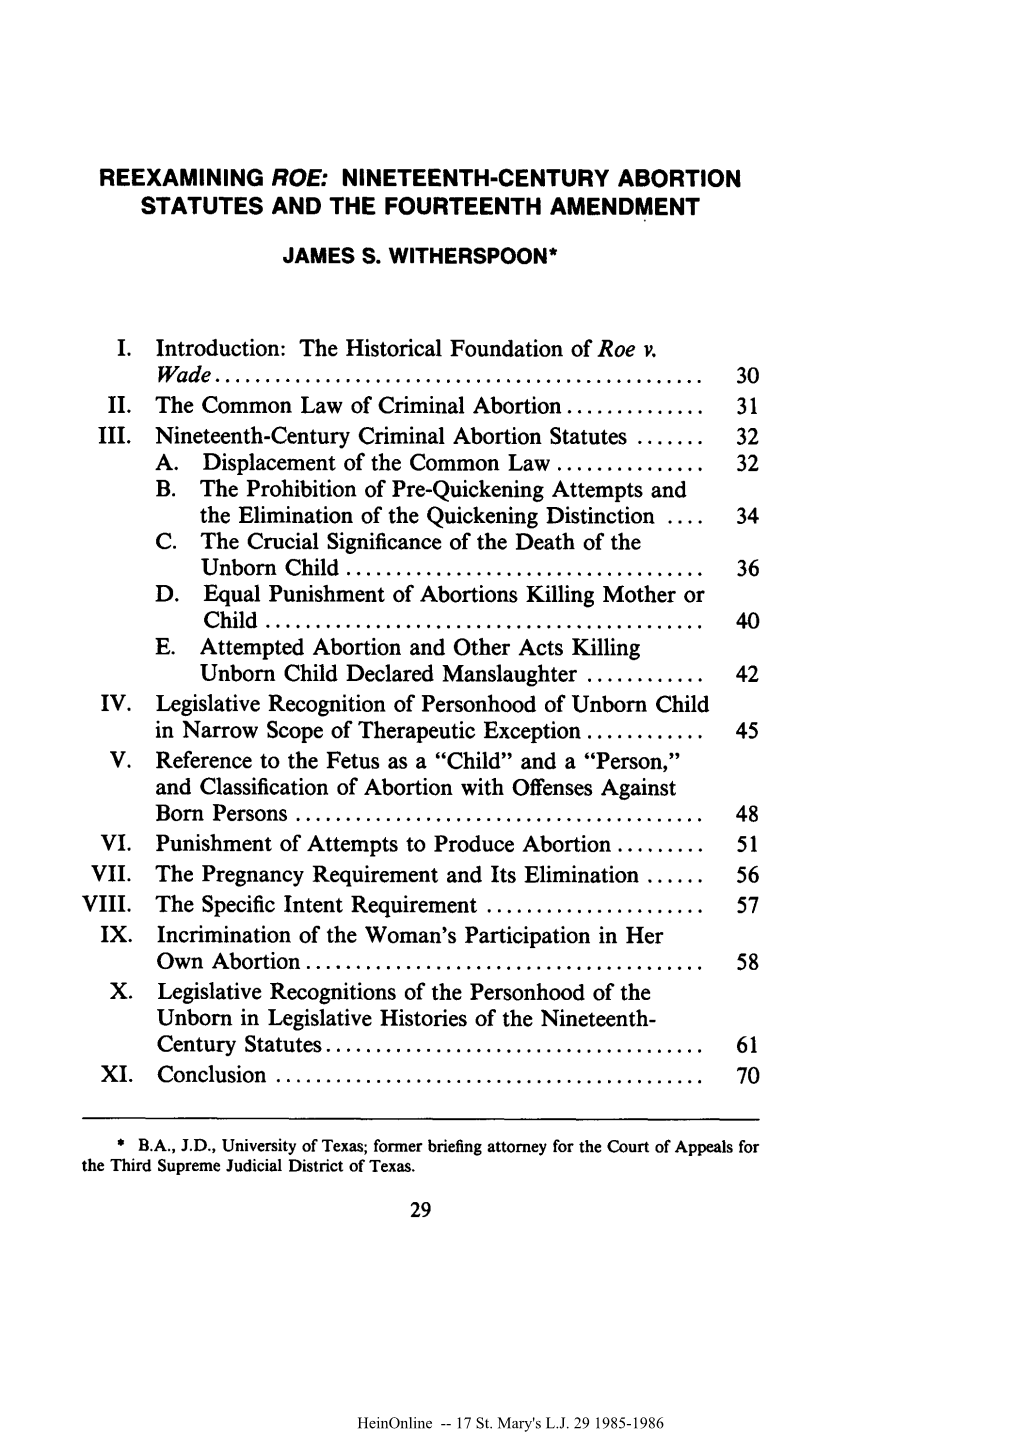 Reexamining Roe: Nineteenth-Century Abortion Statutes and the Fourteenth Amendment